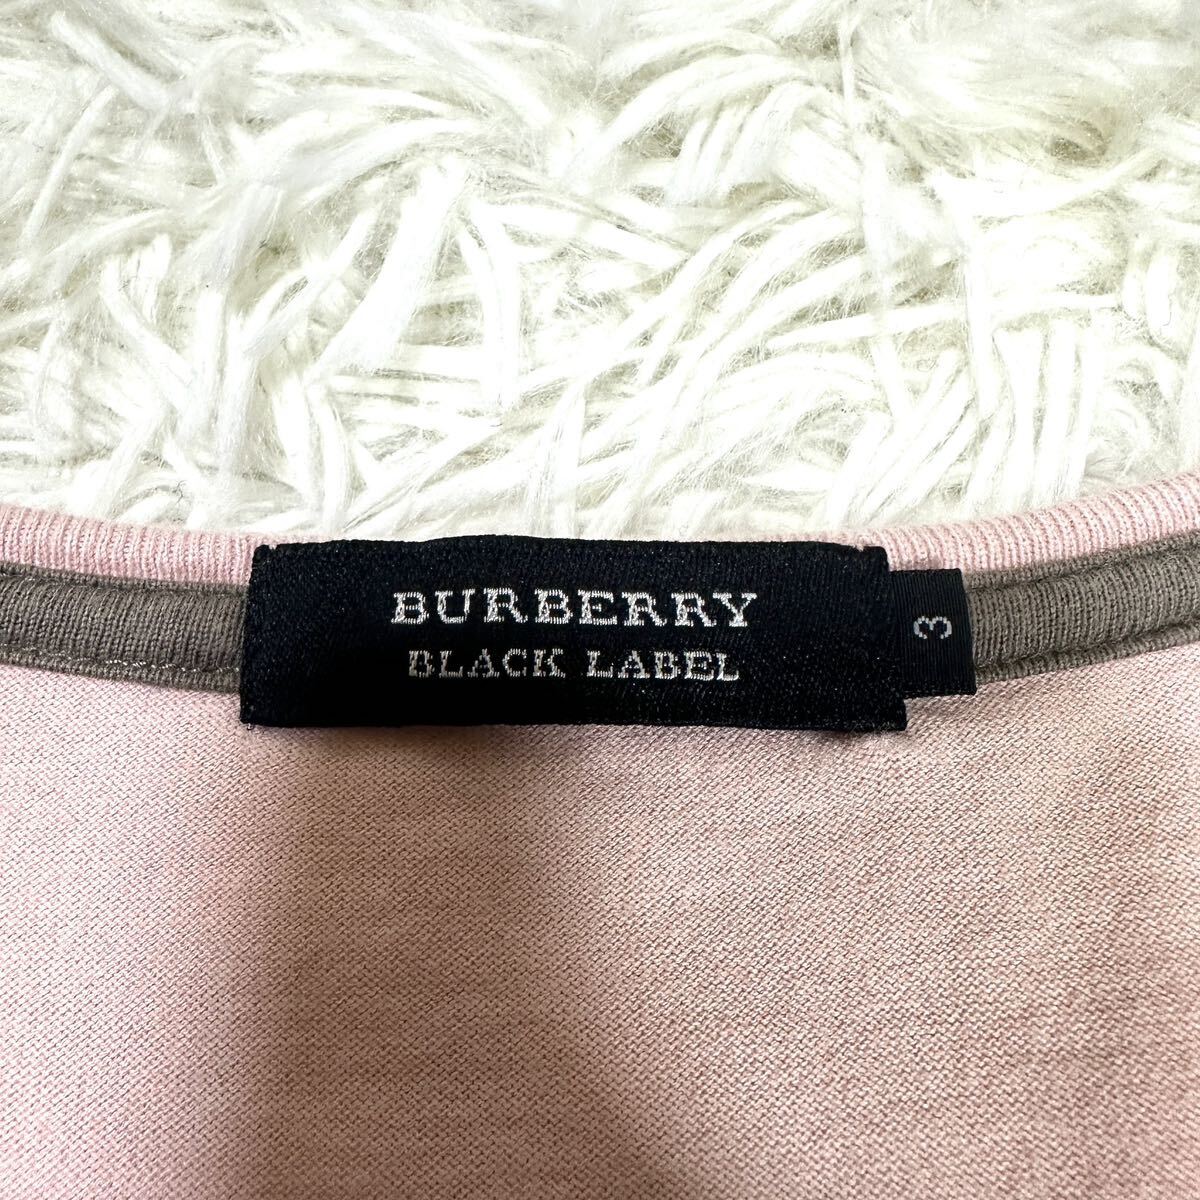 BURBERRY BLACK LABEL バーバリブラックレーベル ピンク 半袖 Tシャツ チェック柄 ホースロゴ サイズ3_画像4